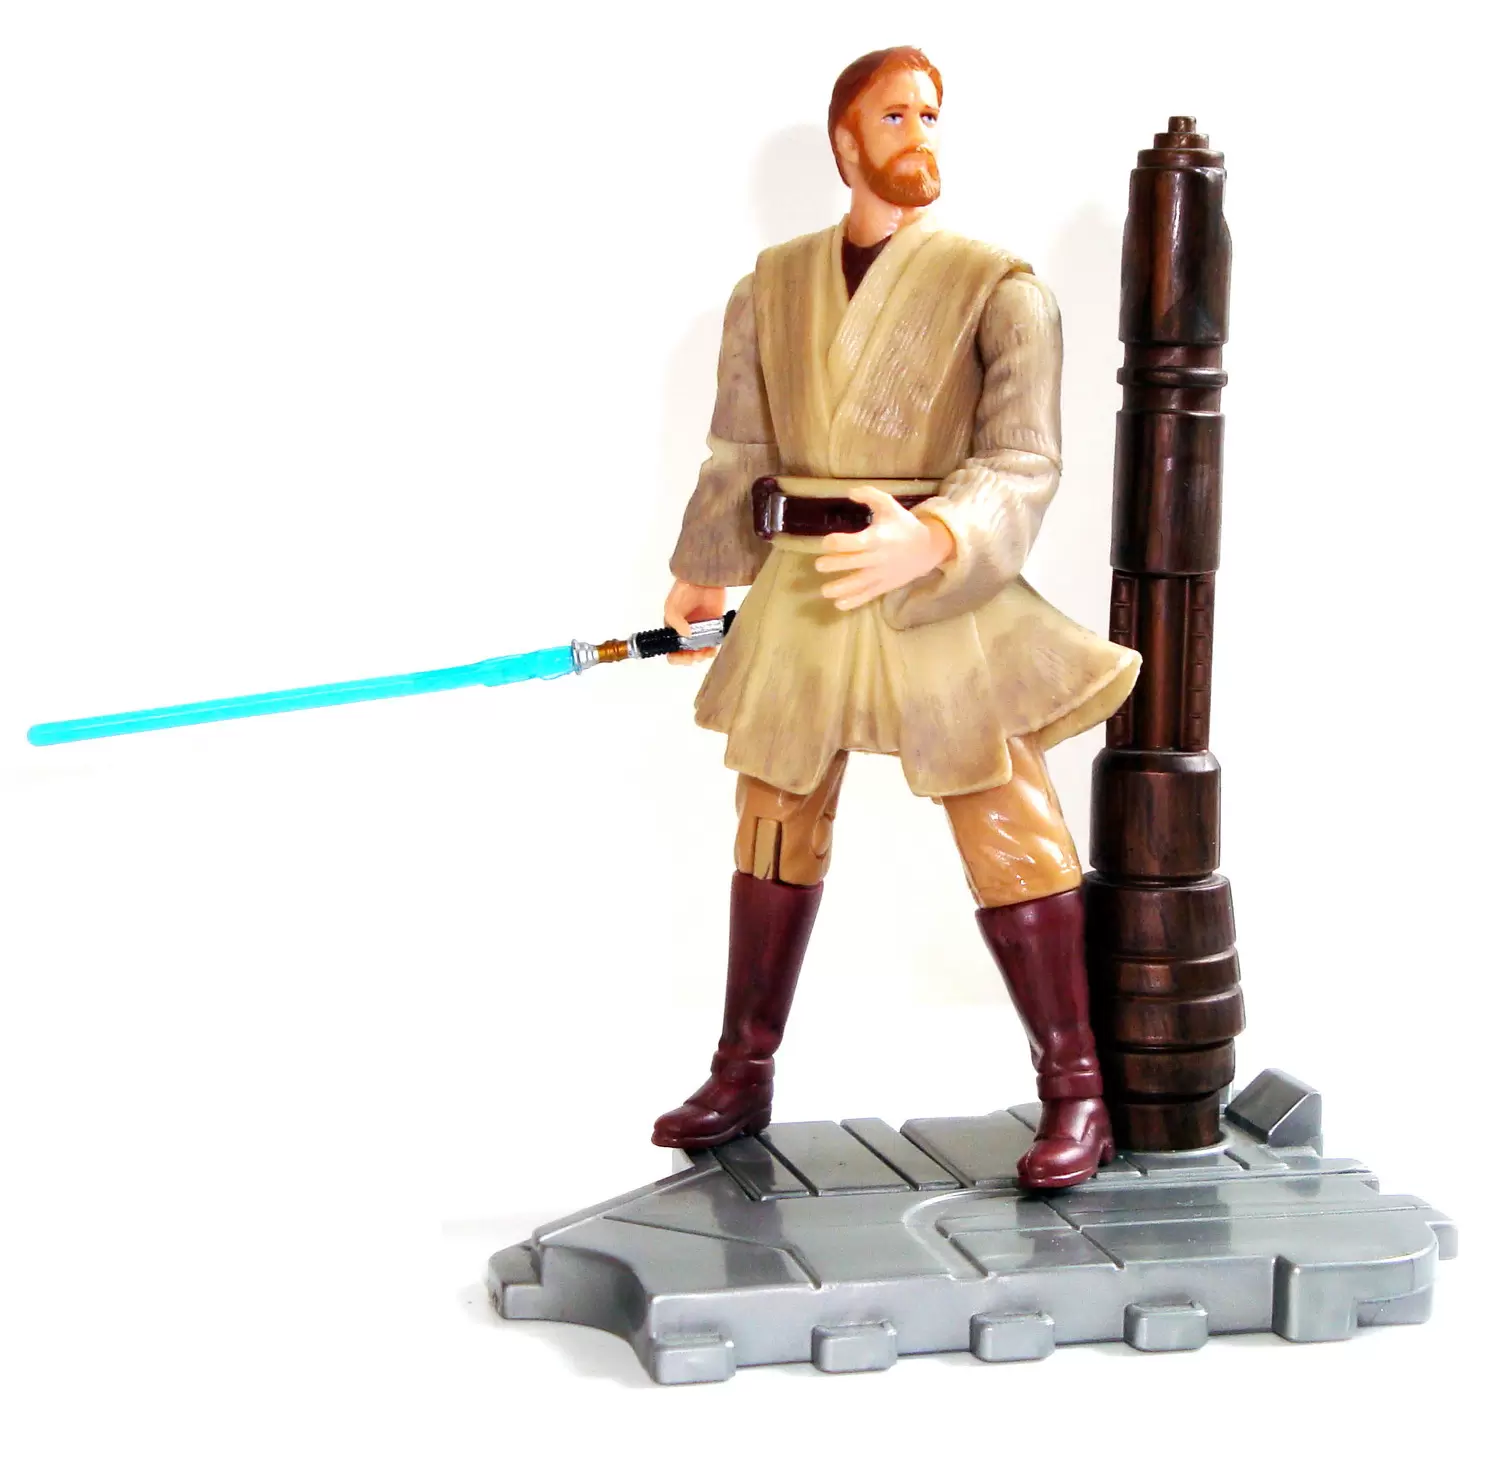 Revenge of the Sith - Obi-Wan Kenobi (Jedi Kick)